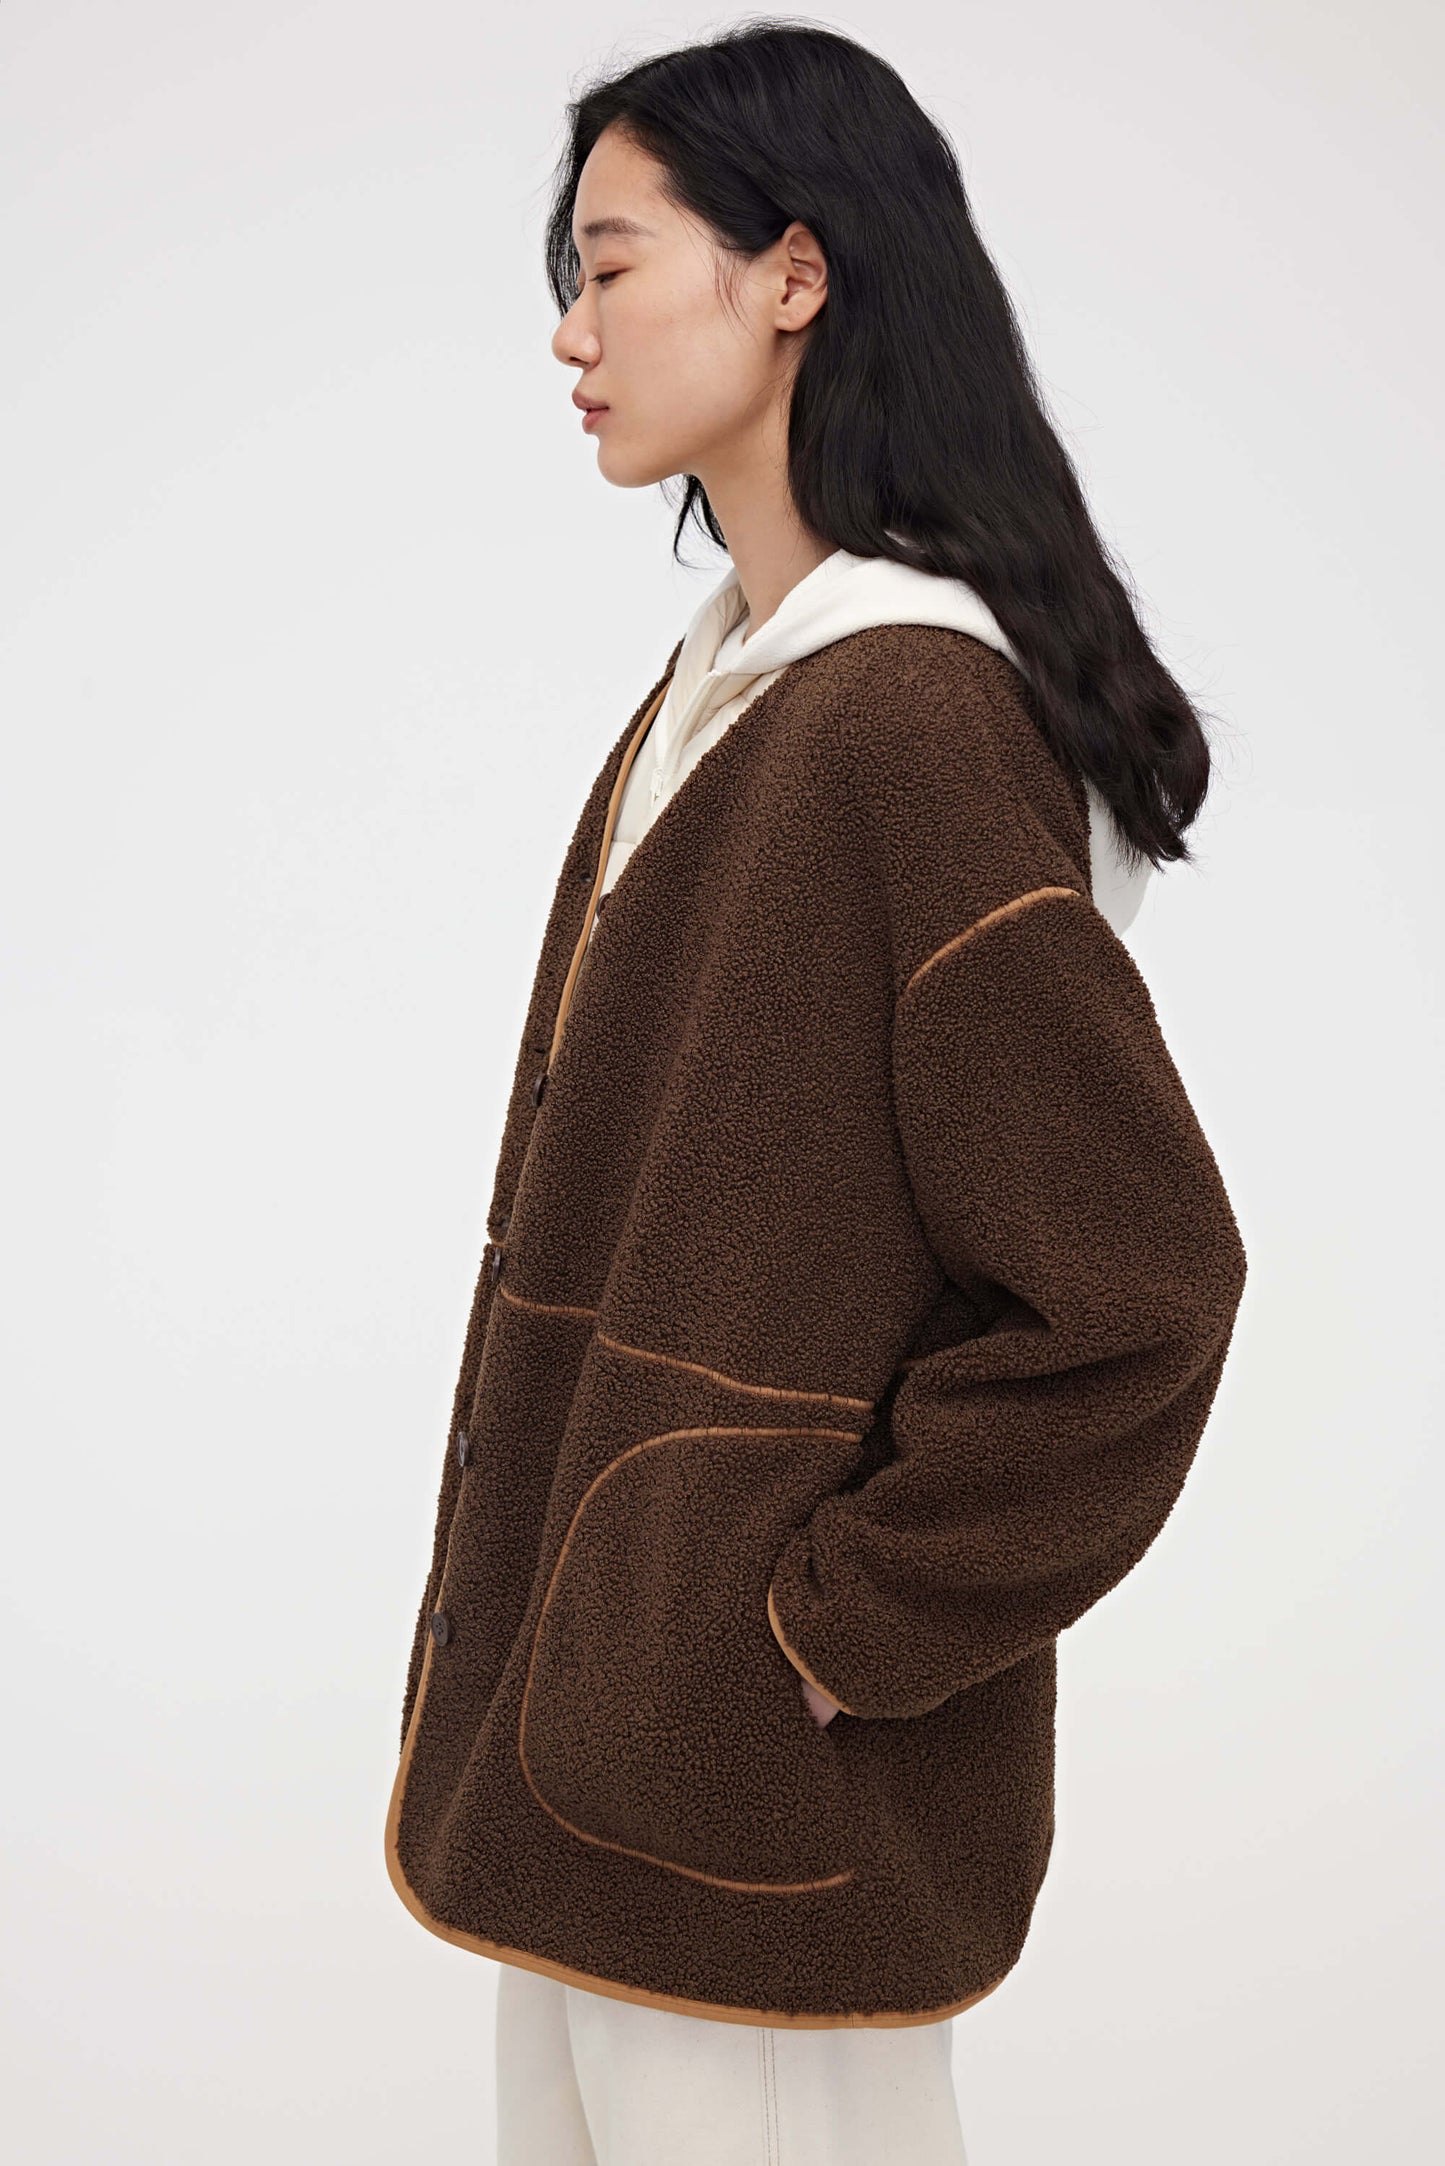 Woman wearing dark brown teddy fleece jacket and facing left